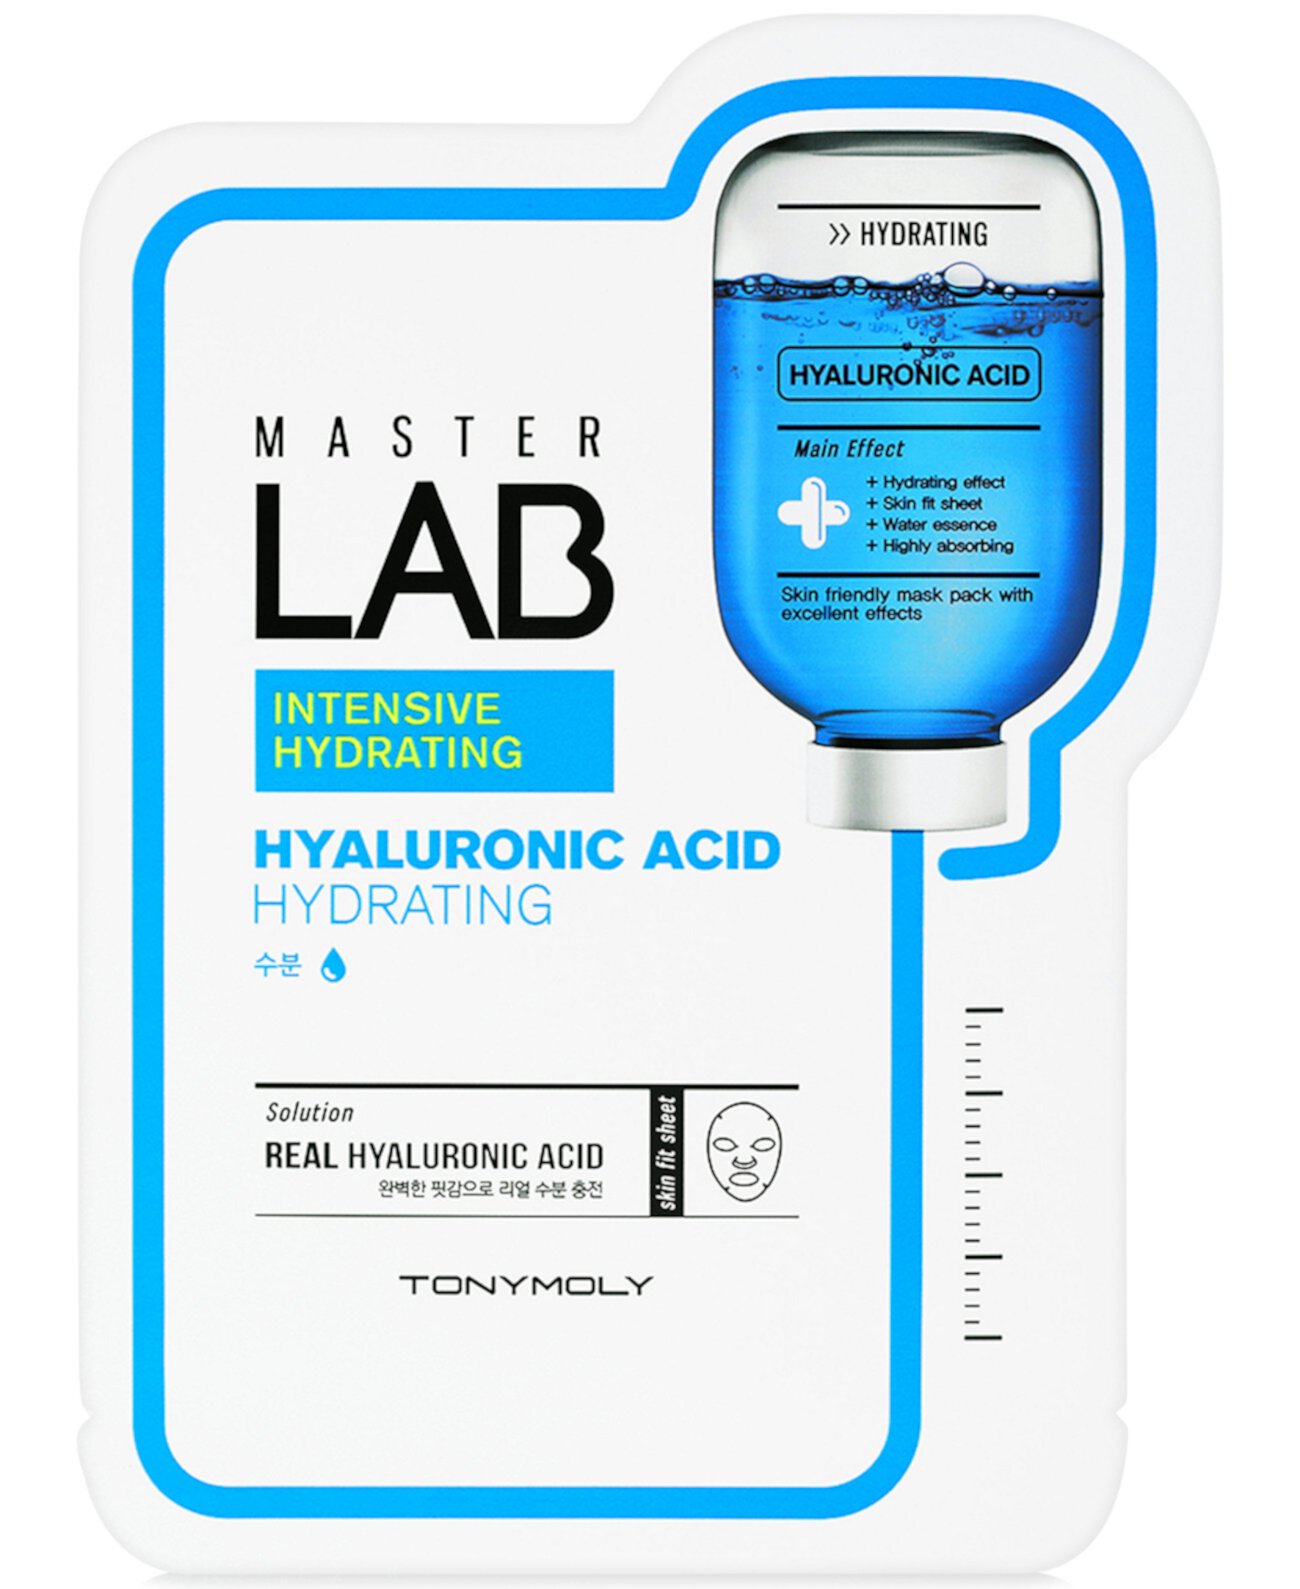 Master Lab Hyaluronic Acid Hydrating Sheet Mask Увлажняющая маска с гиалуроновой кислотой TONYMOLY